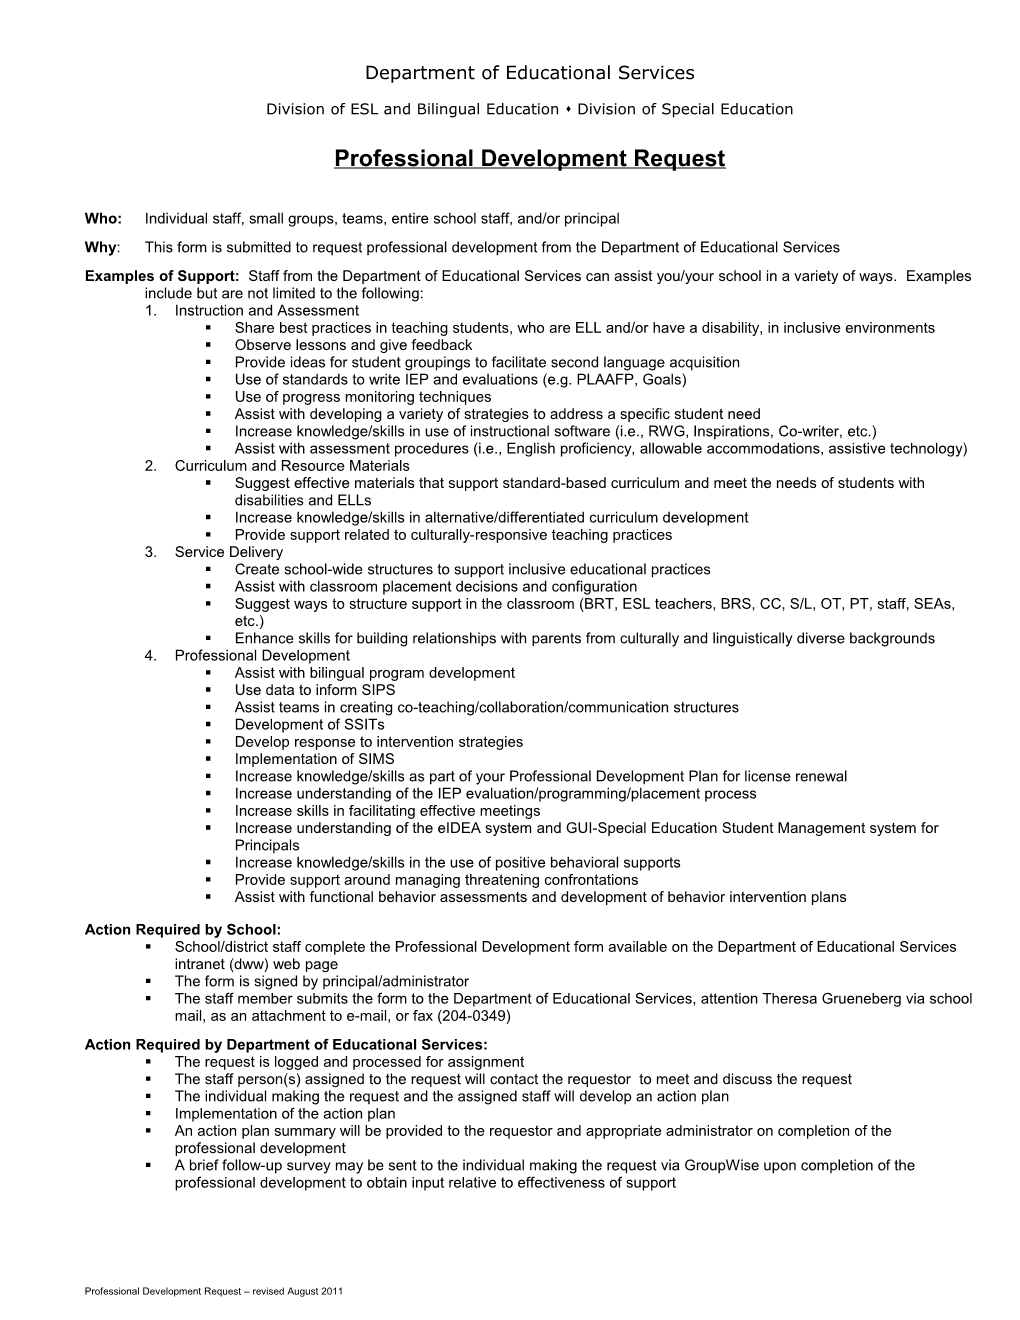 Professional Development Request - Revised February 2010